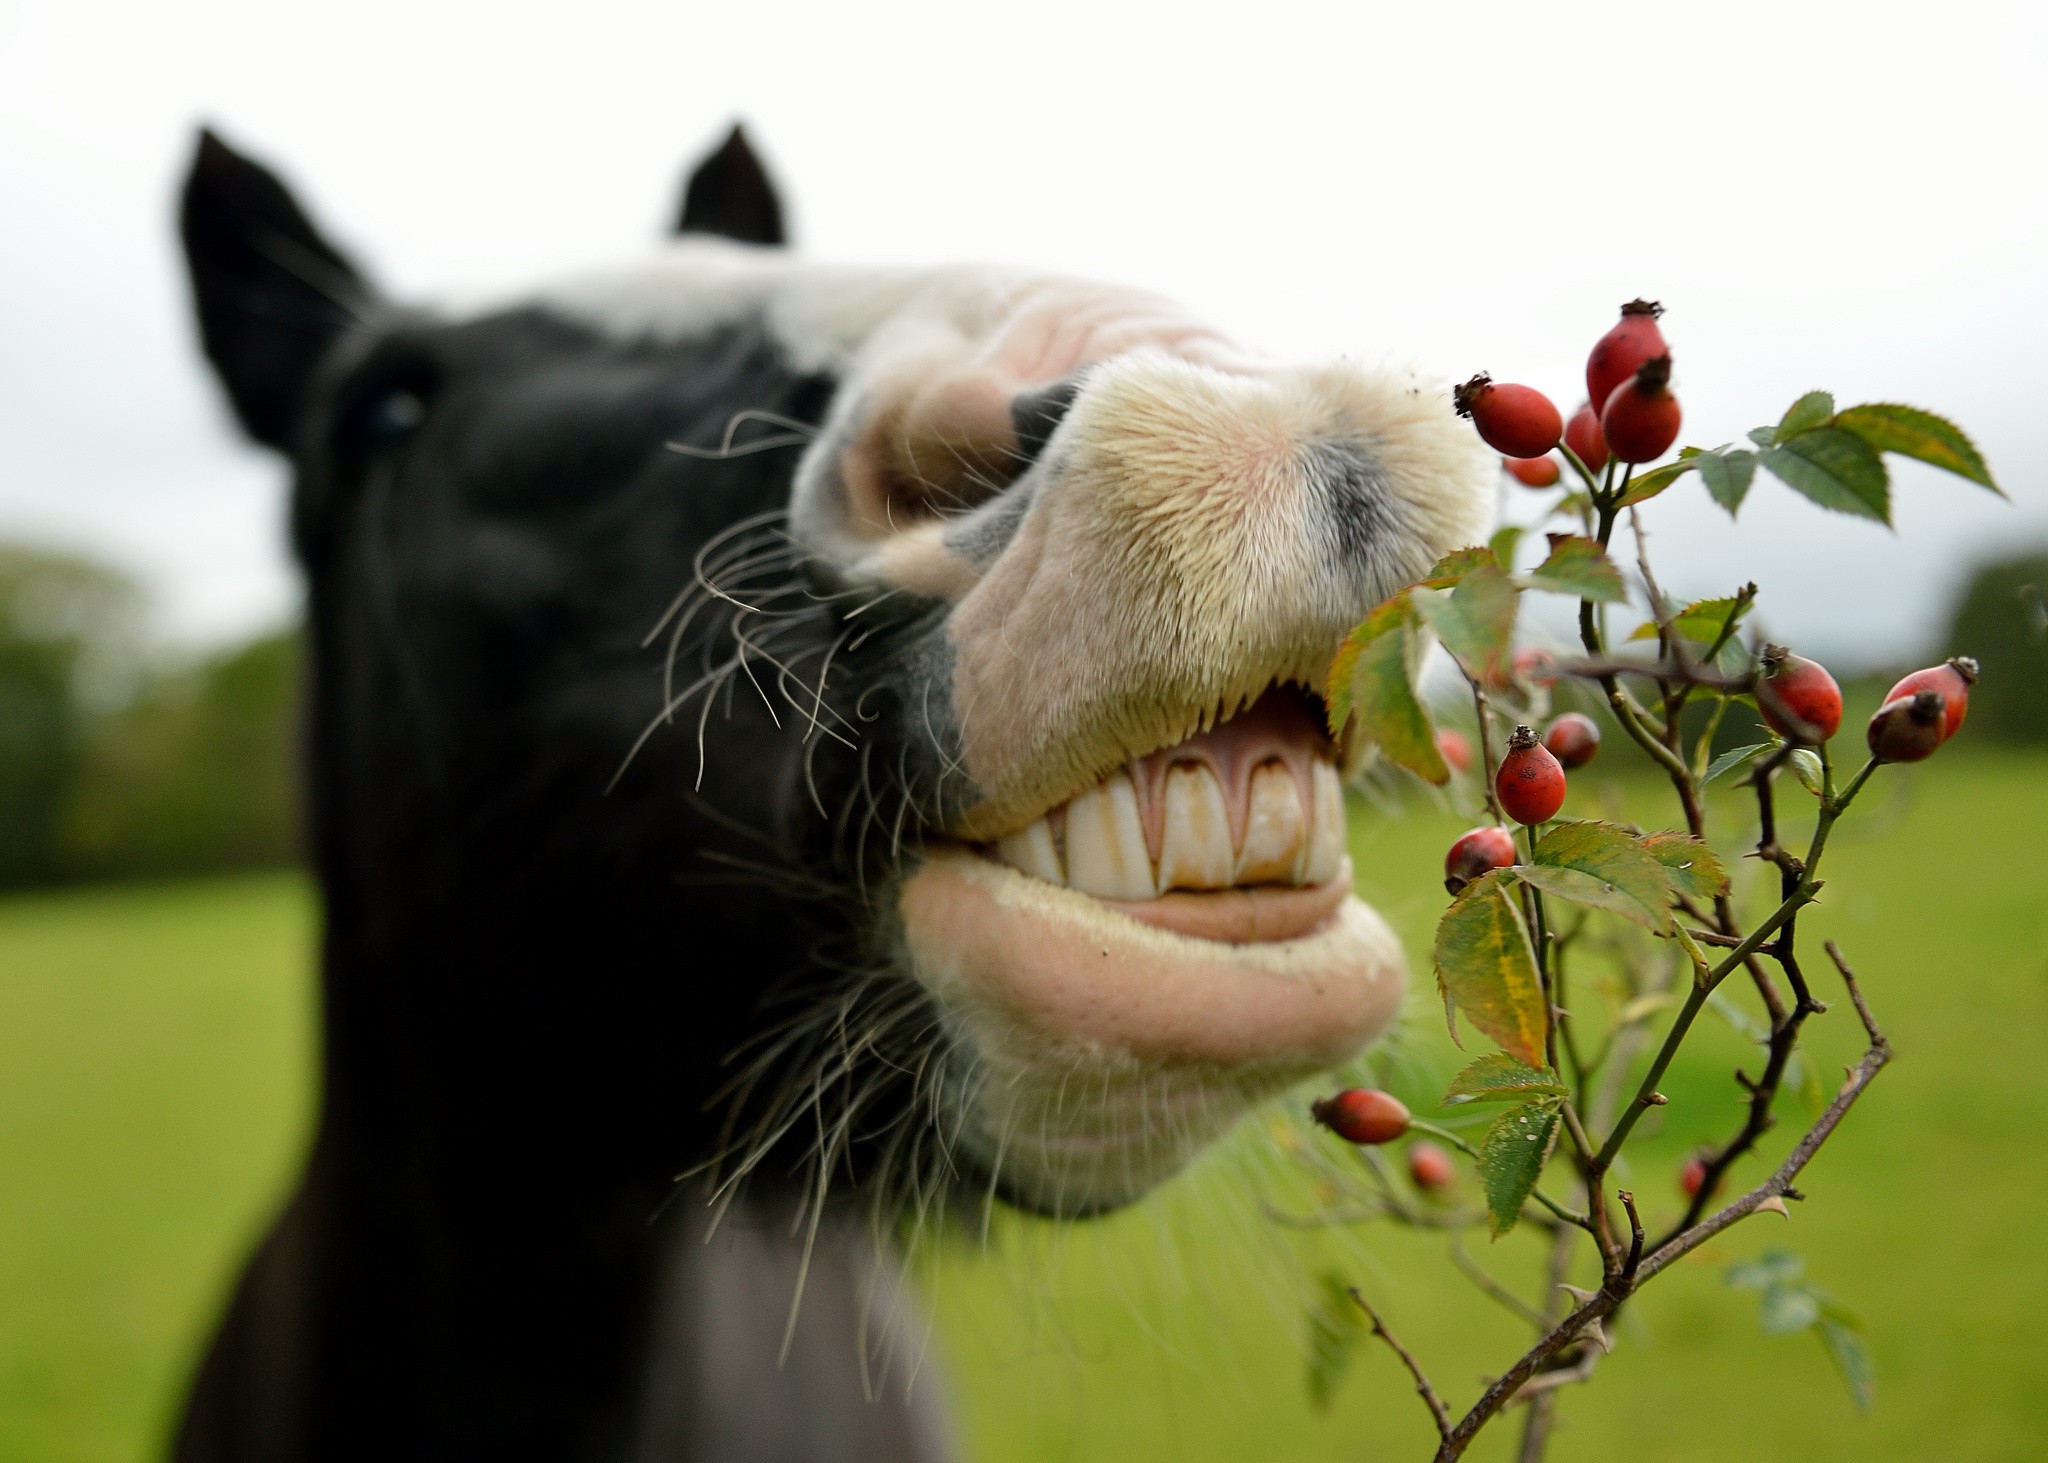 Лошадь нюхает ягоды на ветке